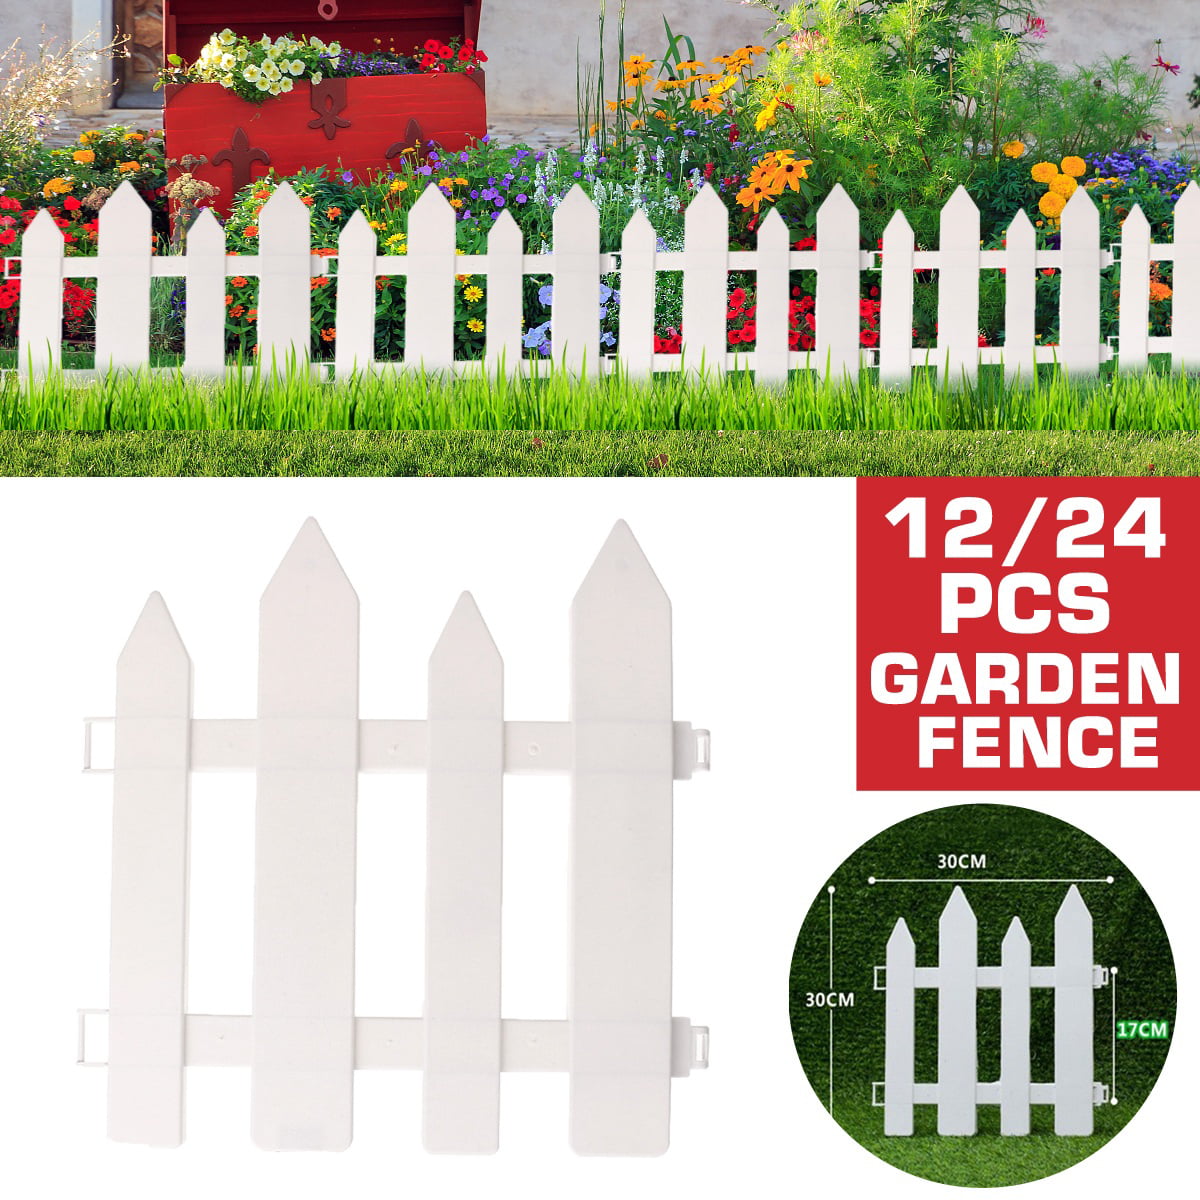 4 Brown Plastic Wooden Effect Lawn Border Edge Garden Edging Picket Fencing Set 